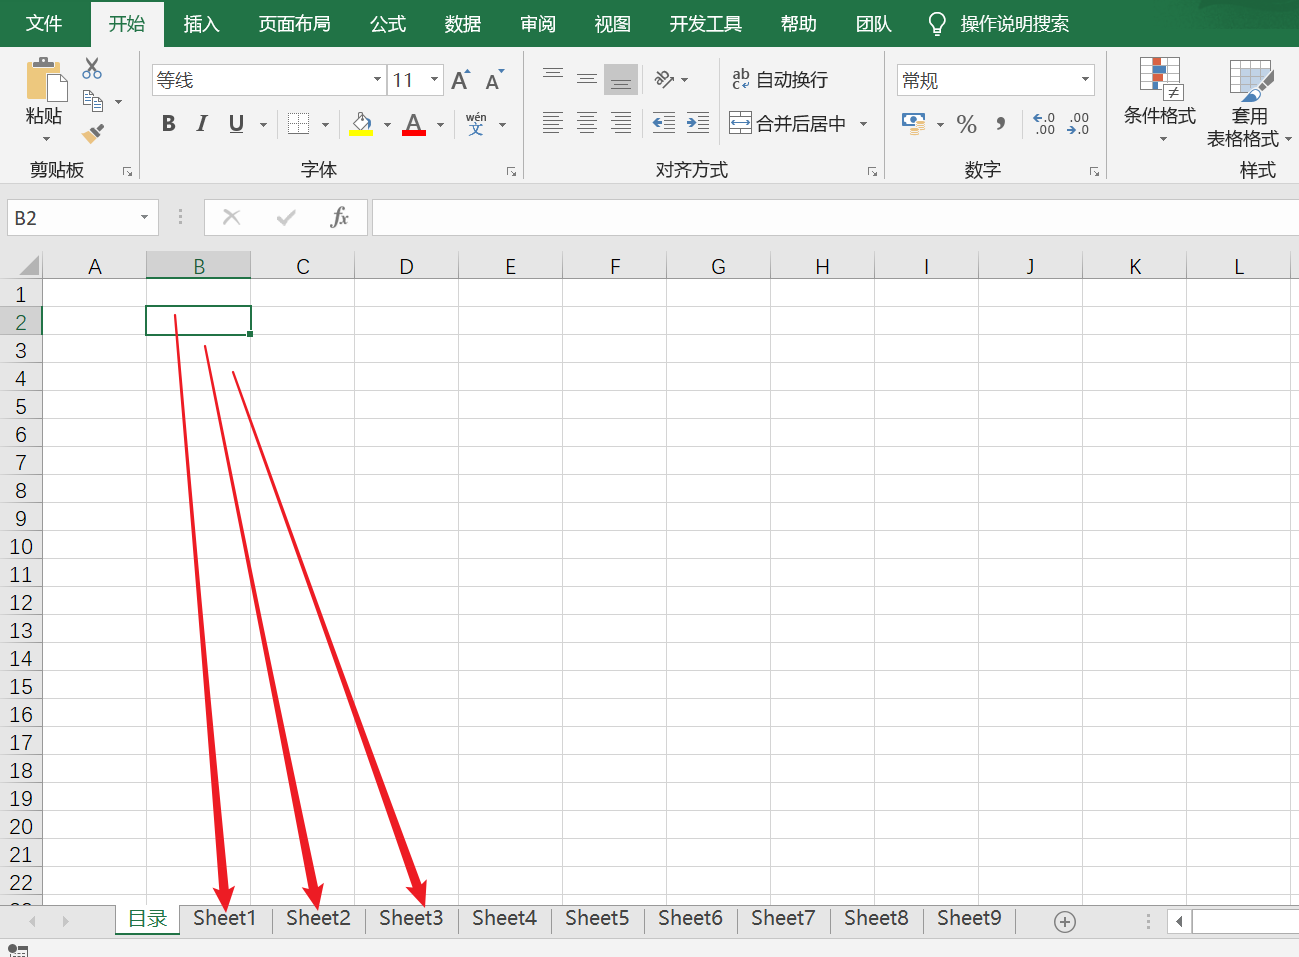 Excel 批量获取sheet页名称，并创建超链接指向对应sheet页